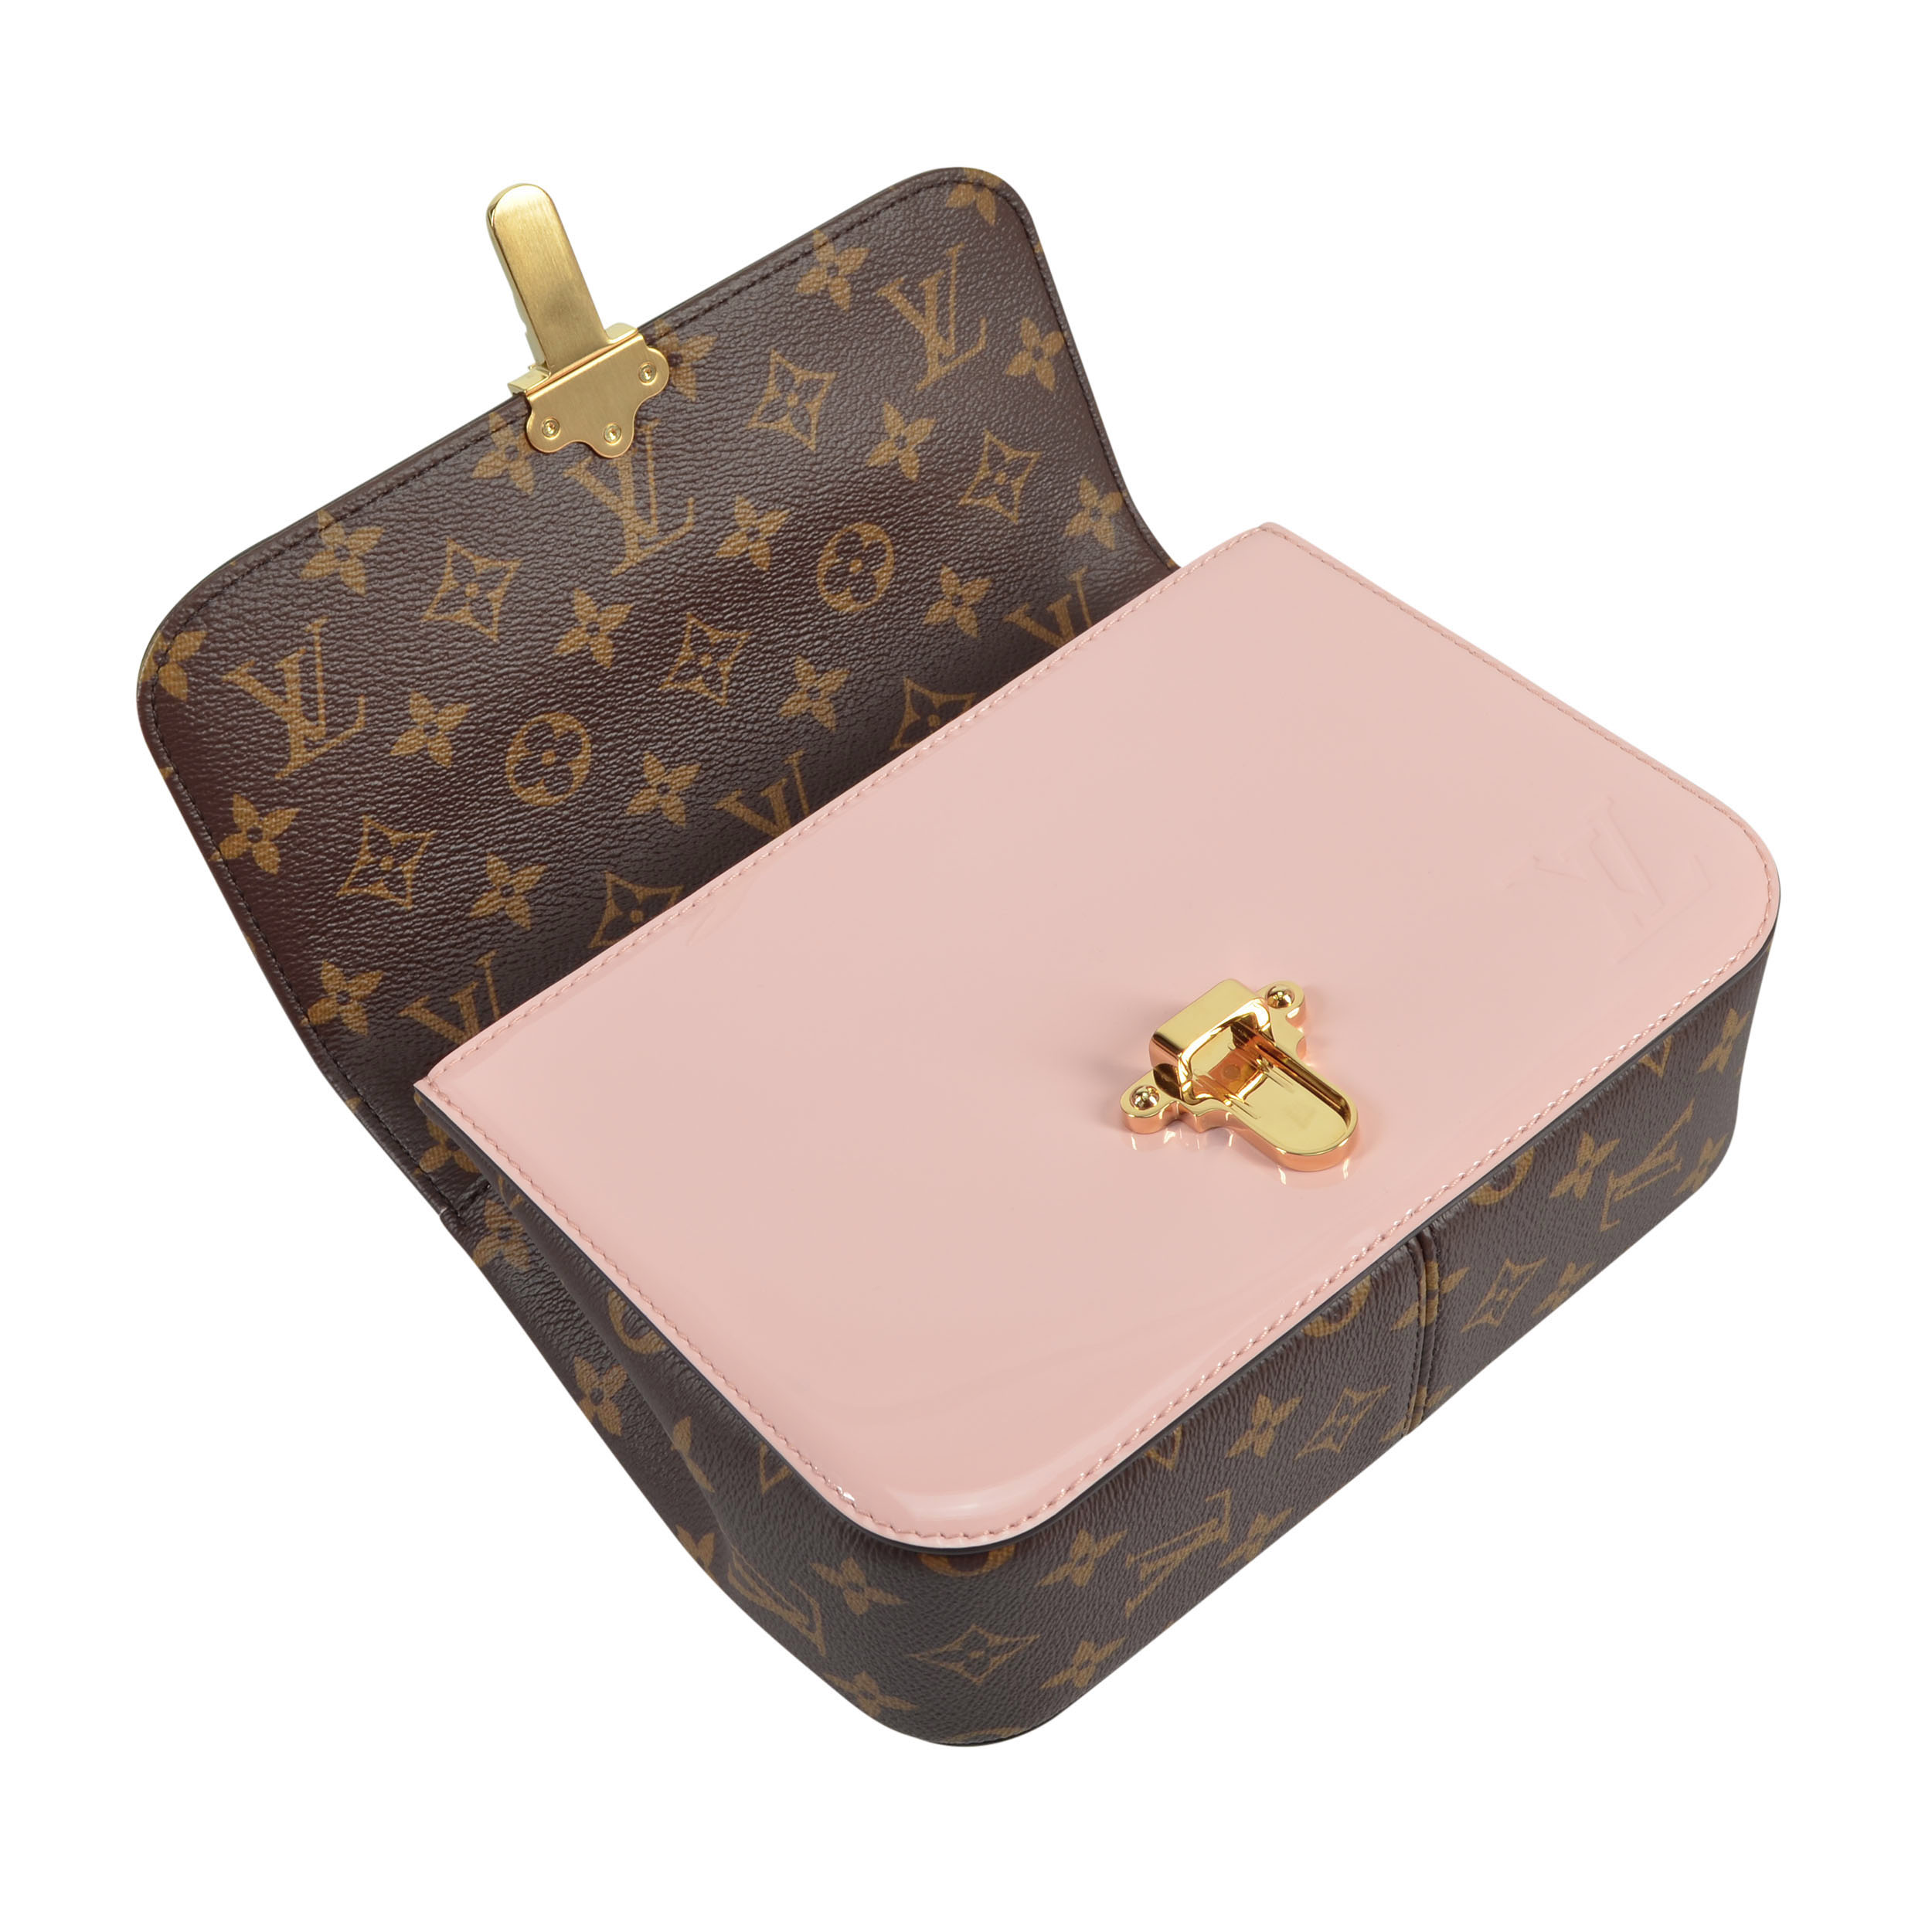 Louis Vuitton Handtaschen aus Leder - Rosa - 32968036